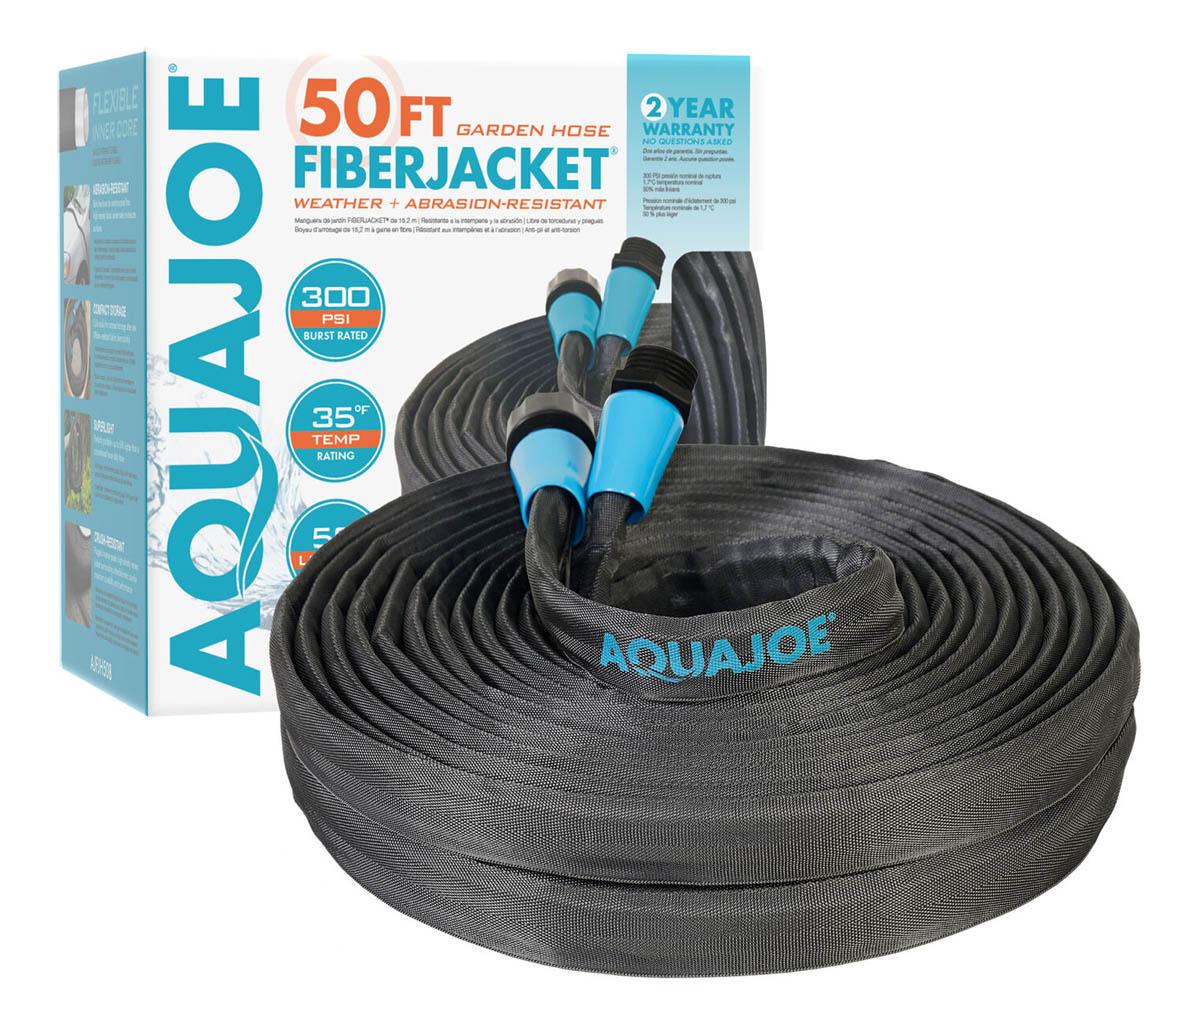 Aqua Joe Ultra Flexible FiberJacket Garden Hose for $15 Shipped